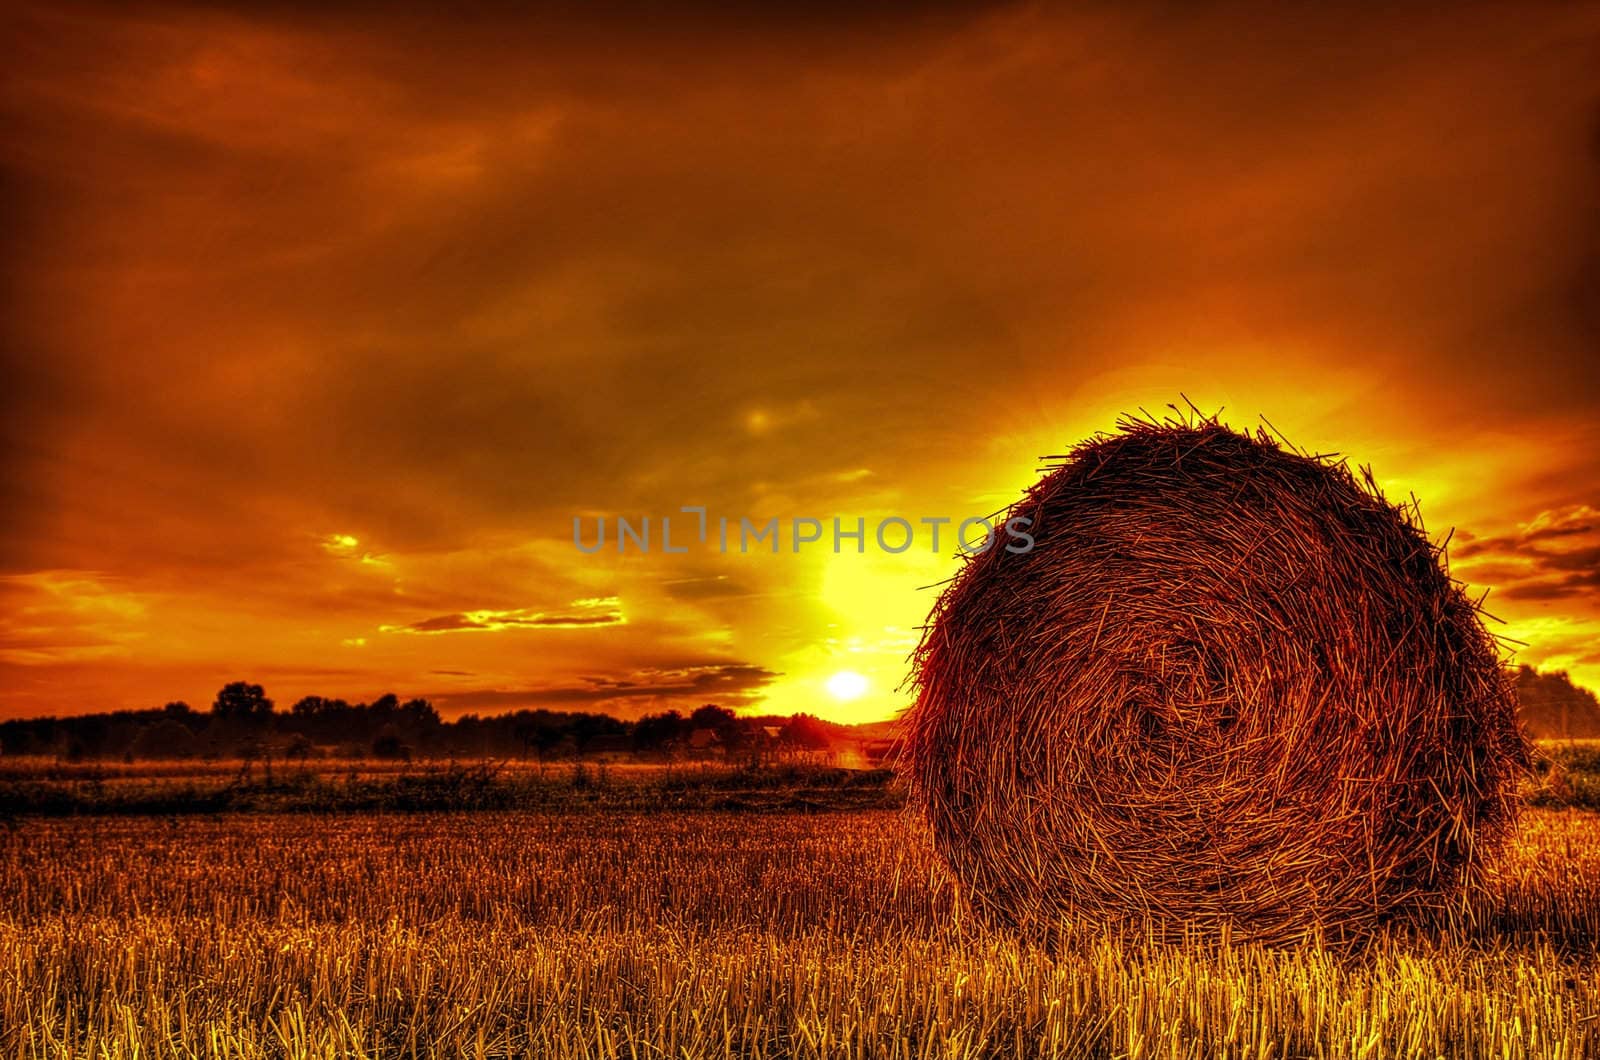 Bales of straw after harvest grain at sunset by PRSchreyner